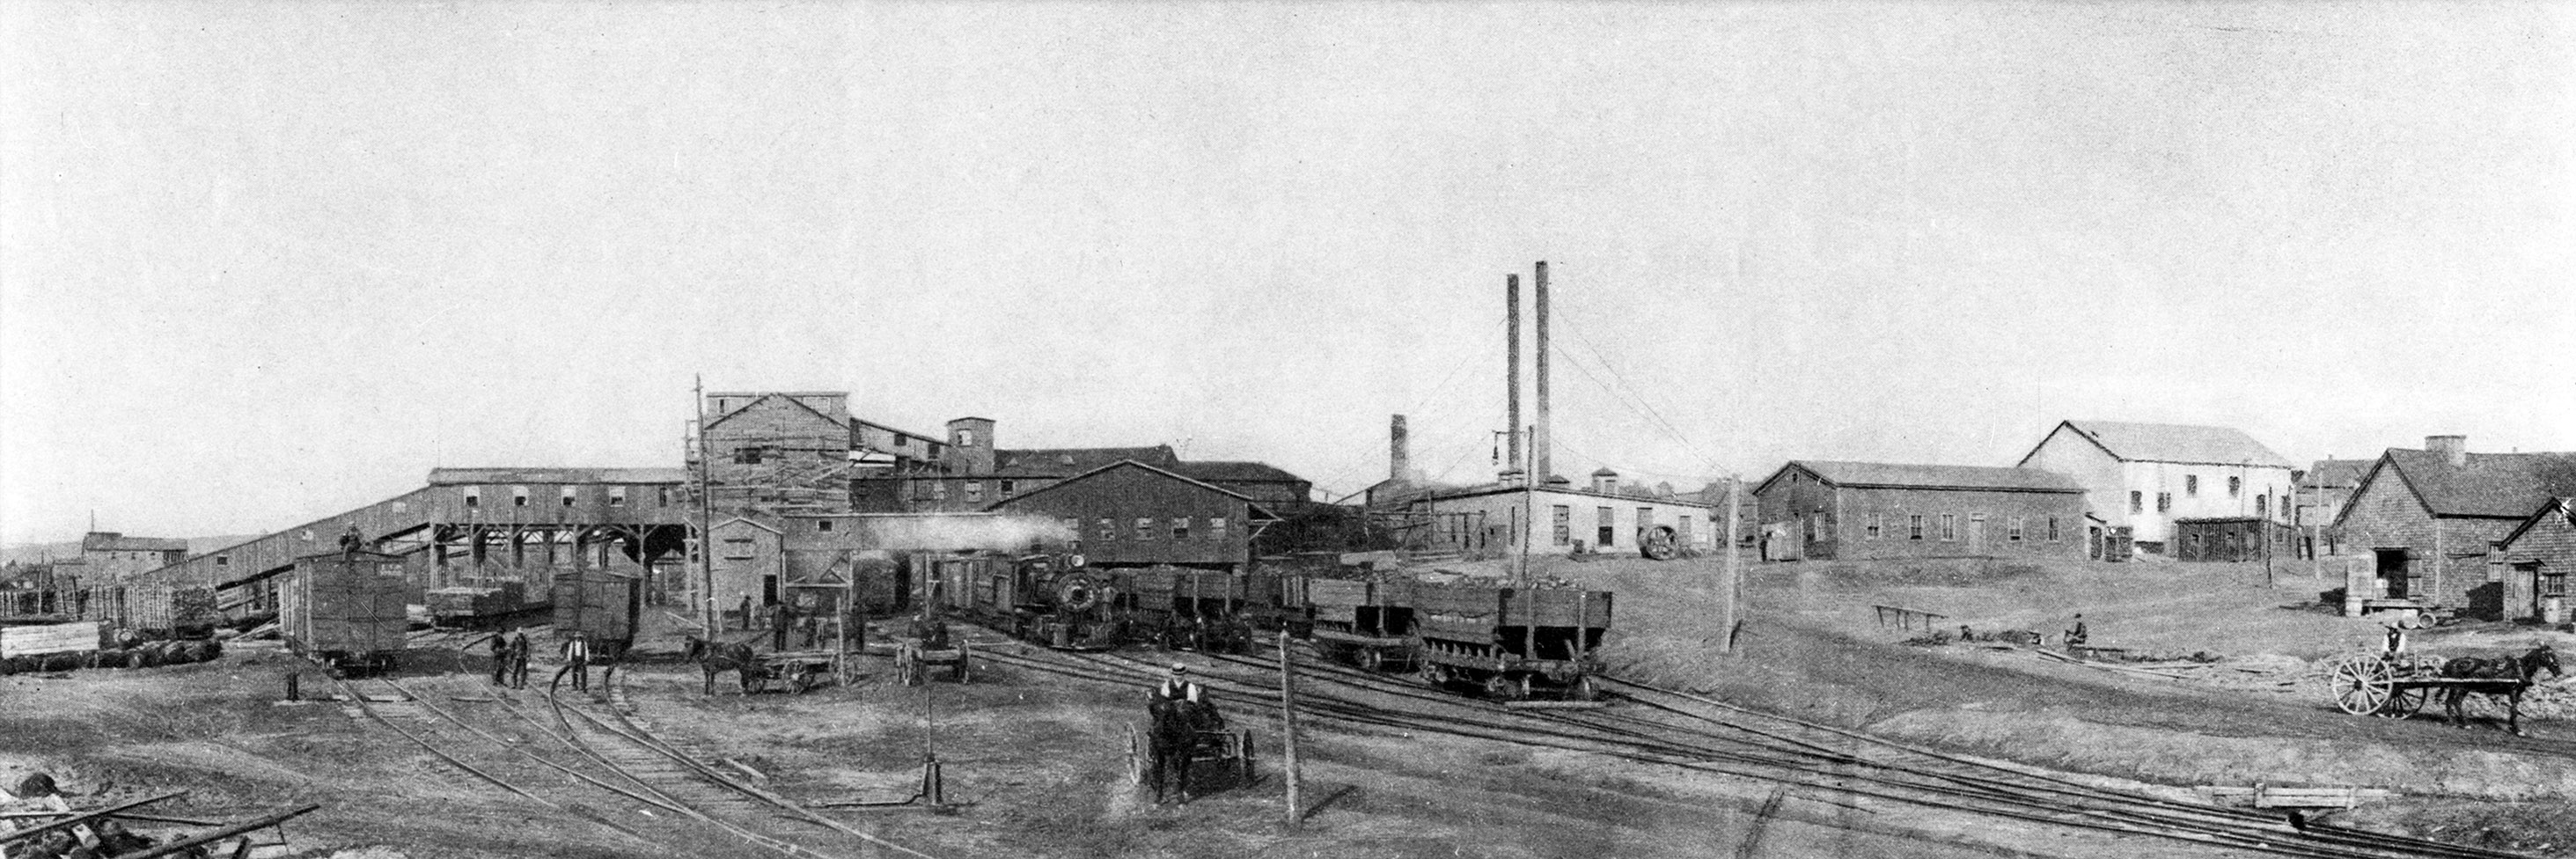 communityalbums - Inverness Railway and Coal Company